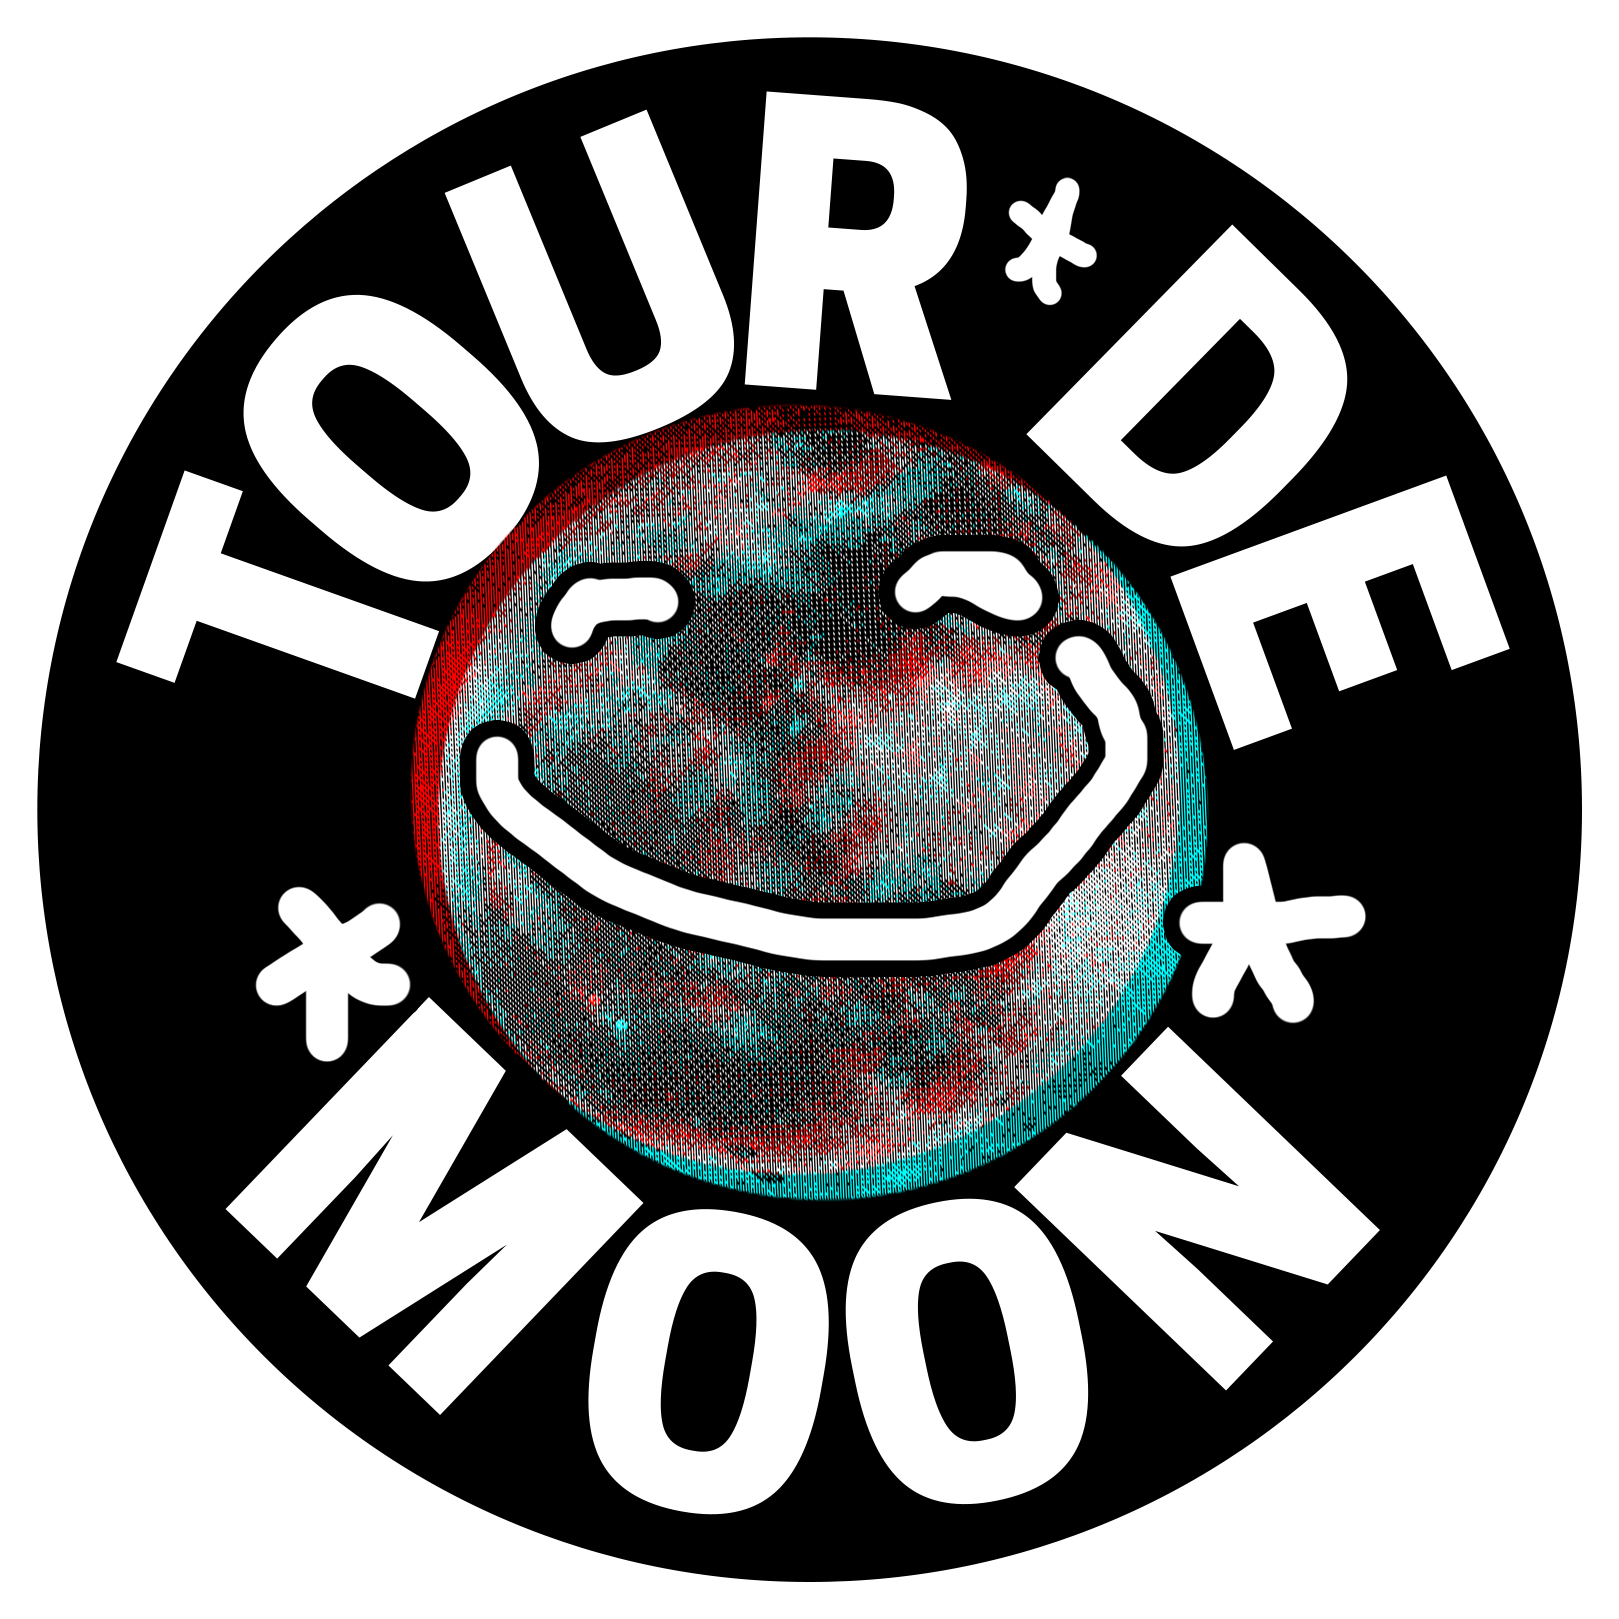 Tour de Moon Render